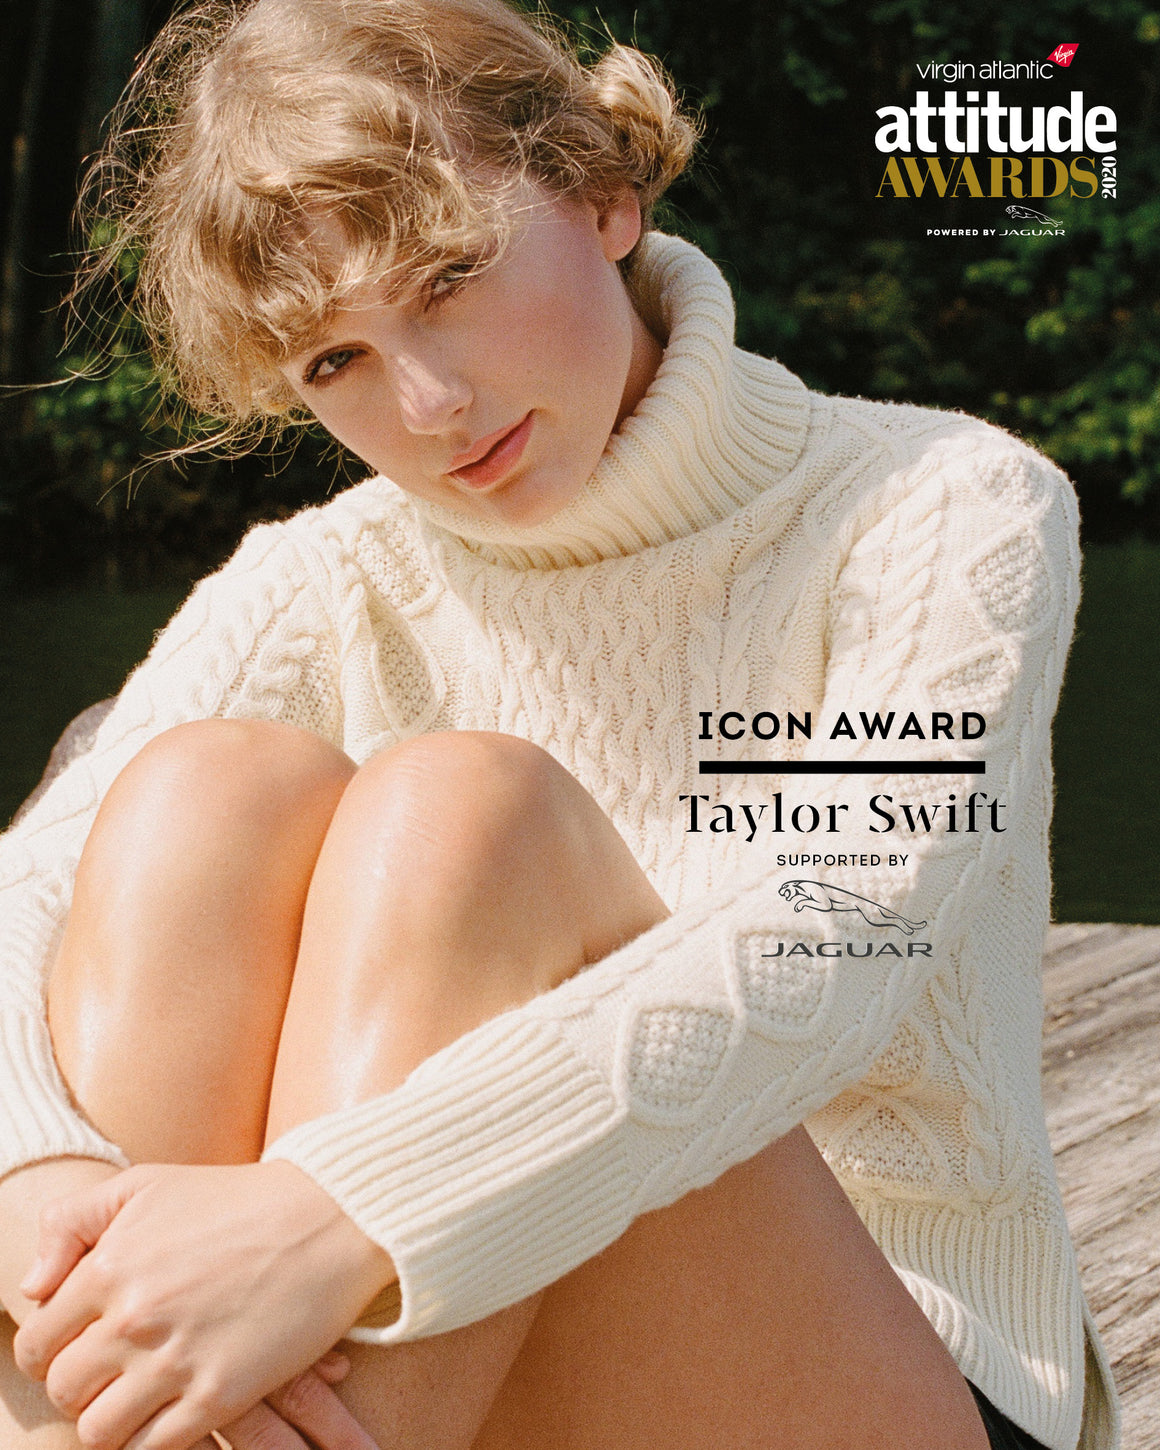 UK Attitude Magazine #330: MICHELLE VISAGE COVER FEATURE Taylor Swift